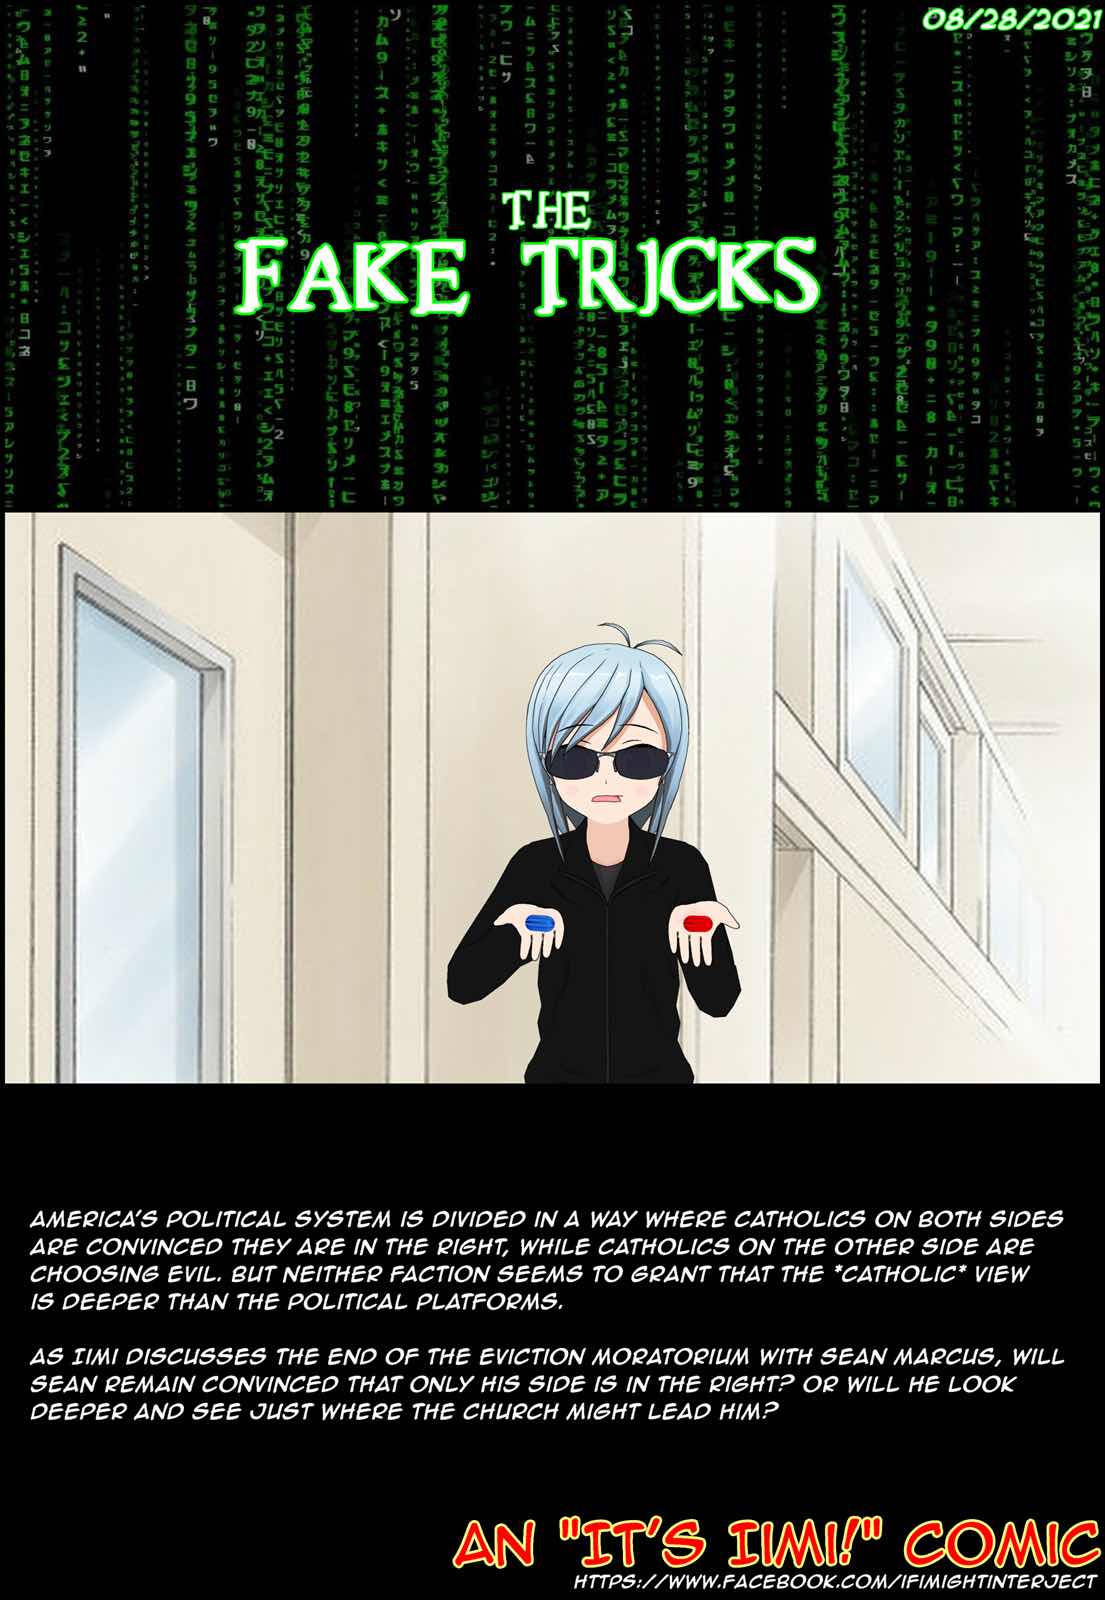 It’s Iimi! The Fake Tricks